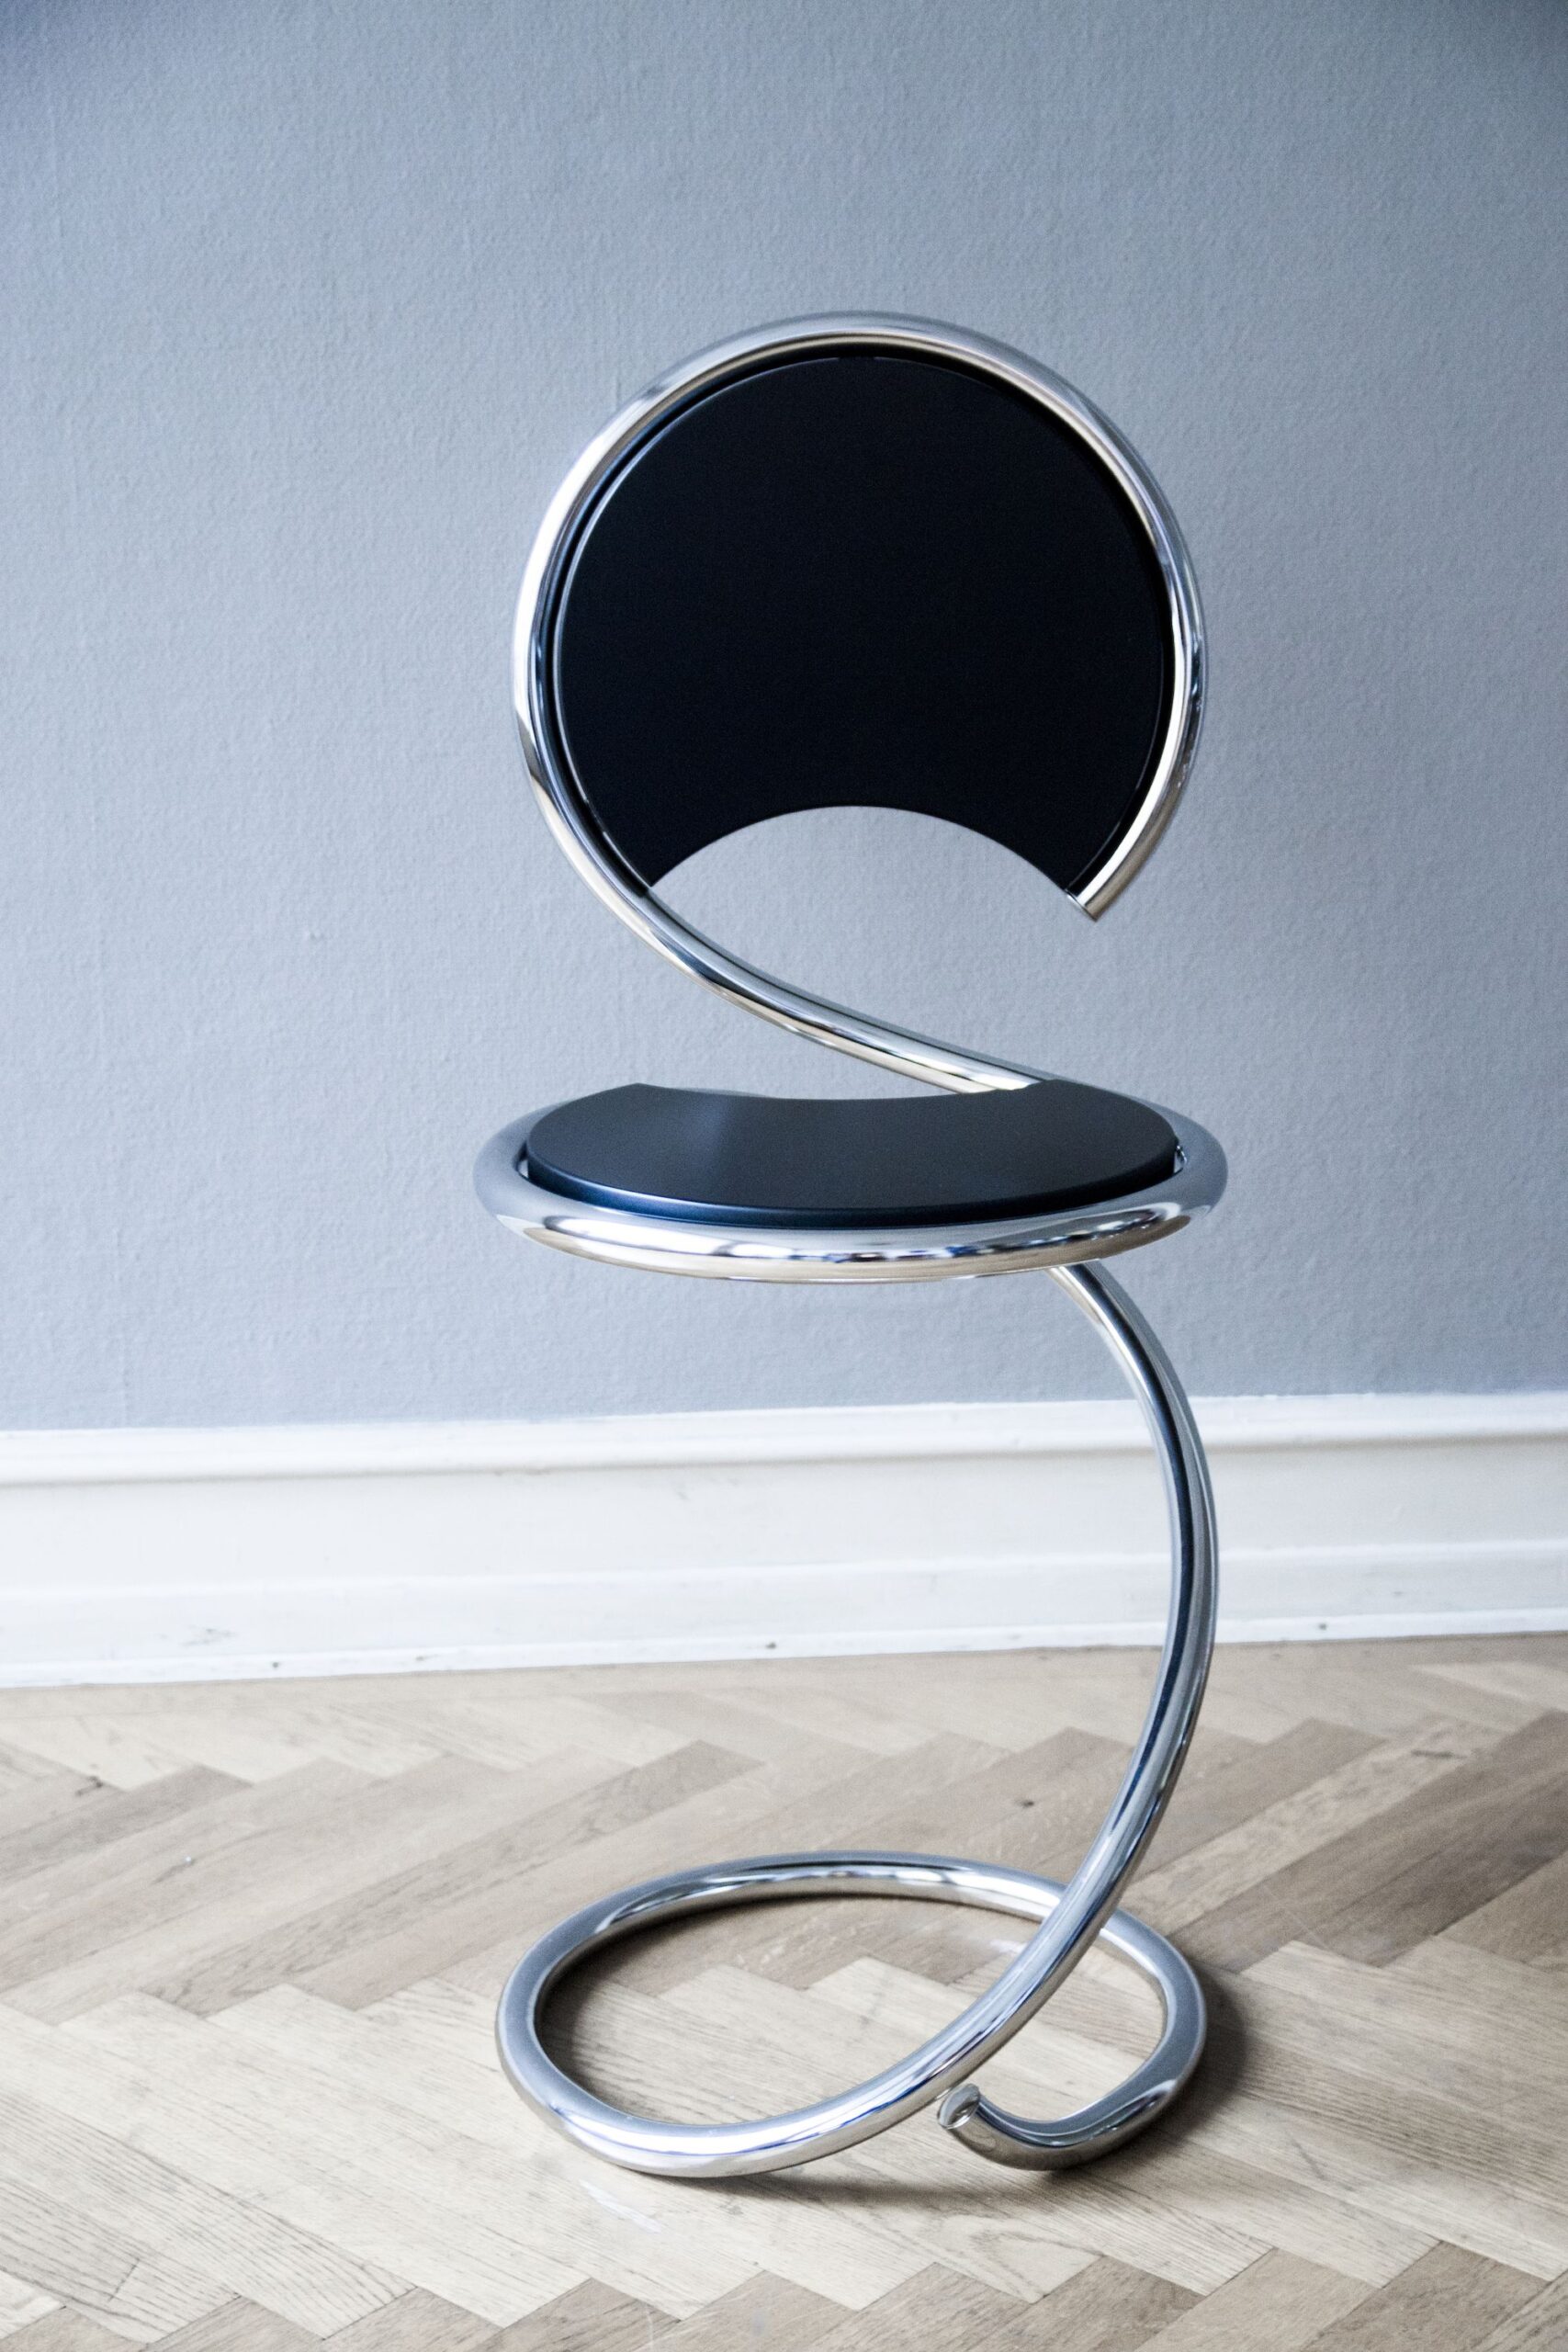 Sleek Seating: Add Modern Flair with Steel Chairs